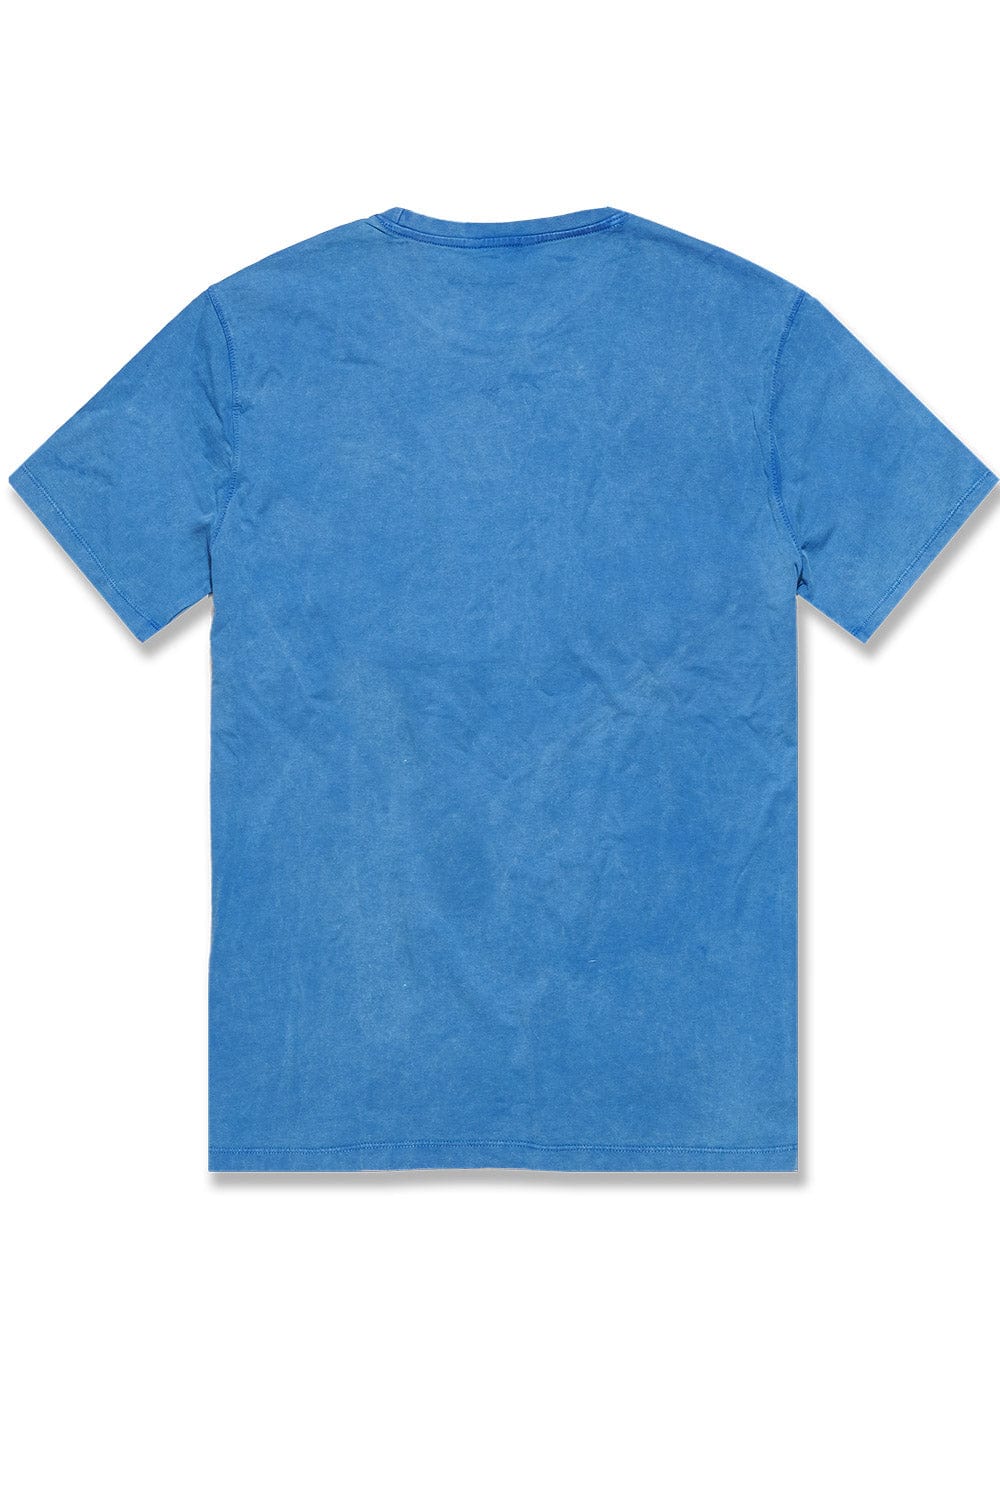 Jordan Craig Tragic T-Shirt (Royal)